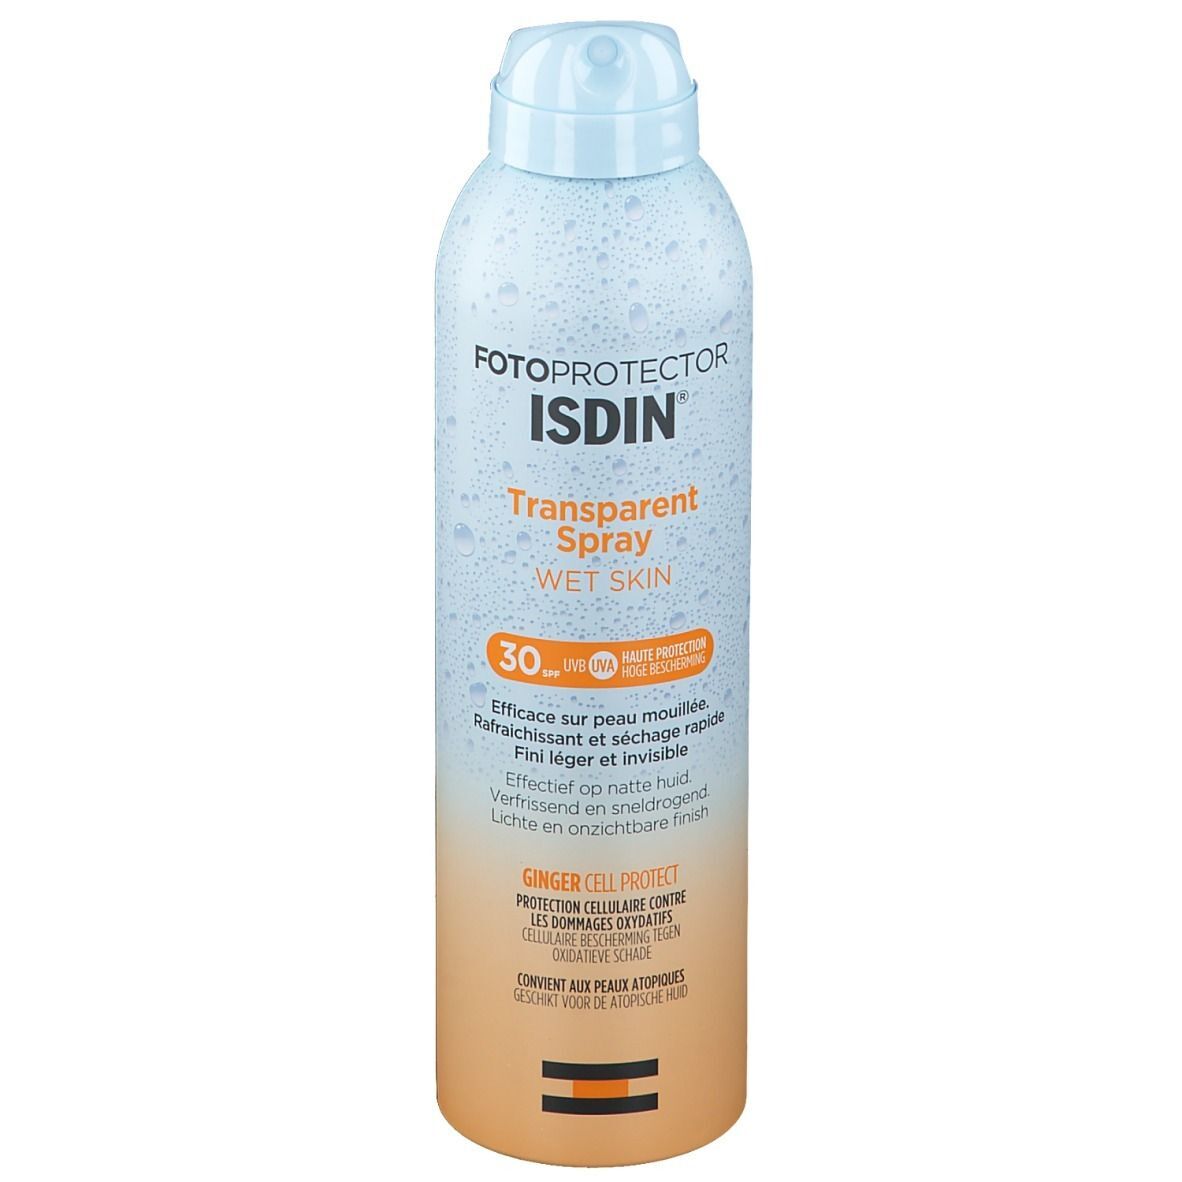 GSA PHARMA Fotoprotector Isdin® Transparent Spray Wet Skin